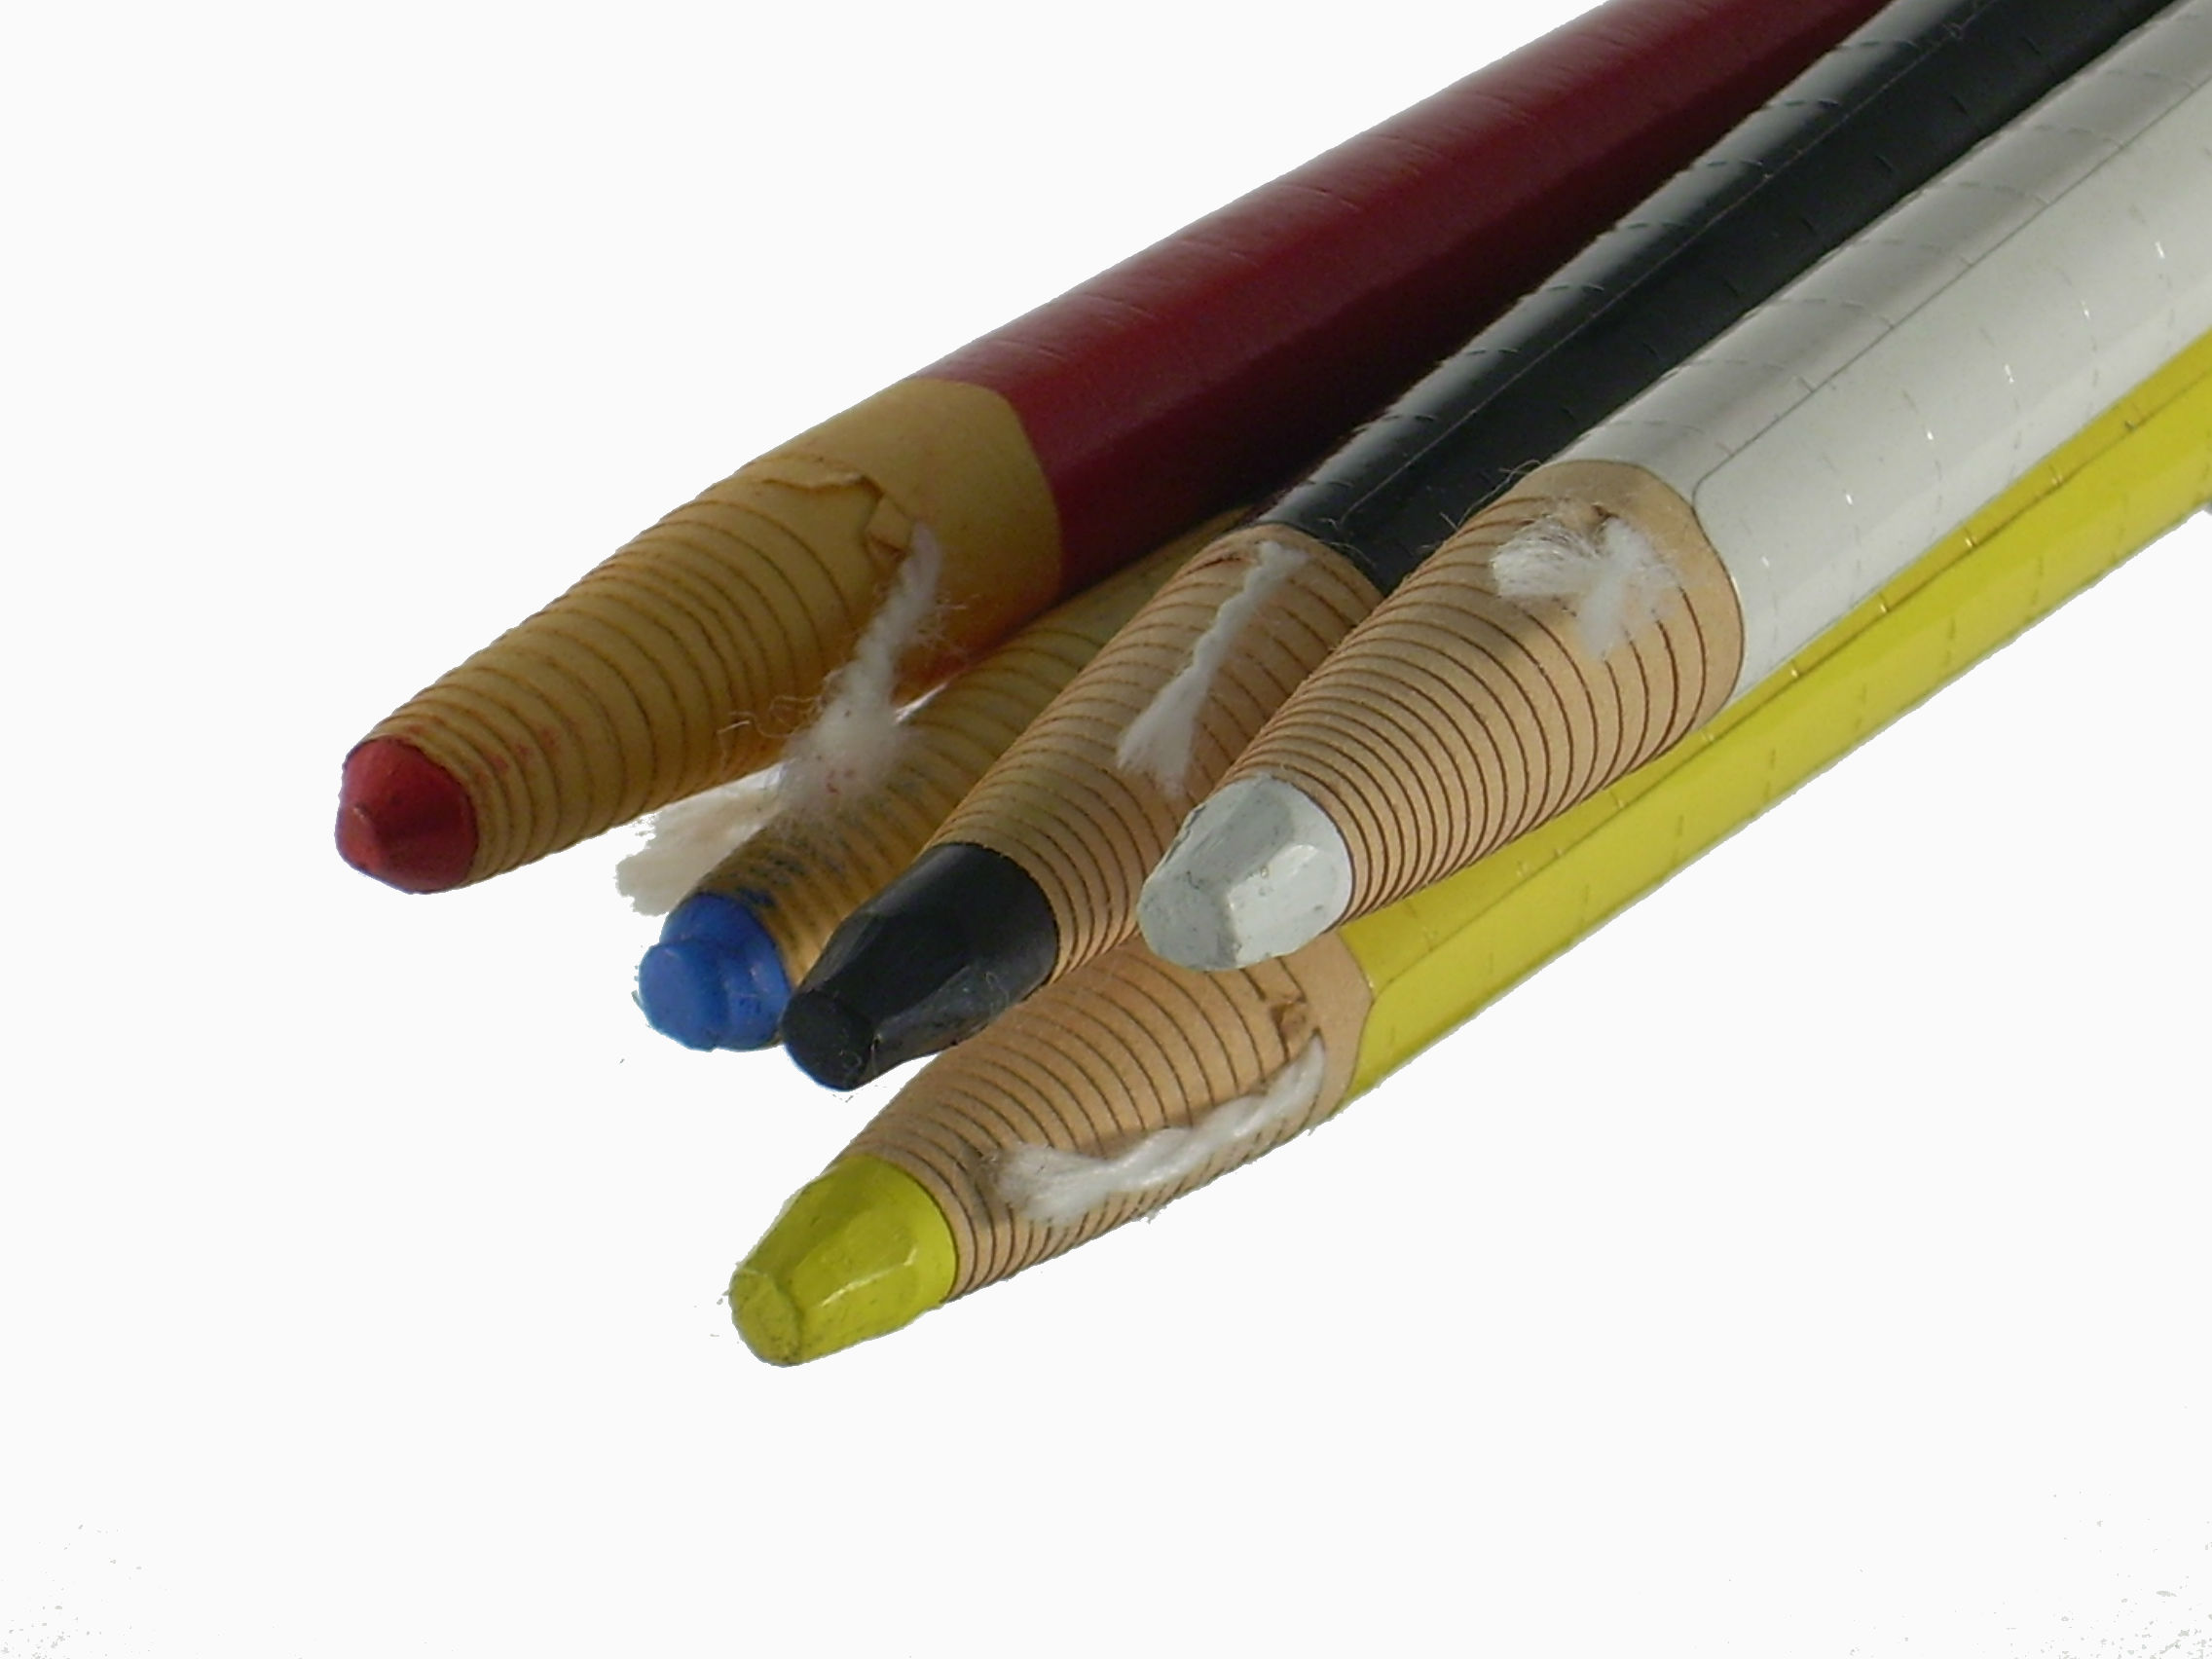 Dixon Multi-Purpose China Marker Pencils, Set of 5 - Rockler